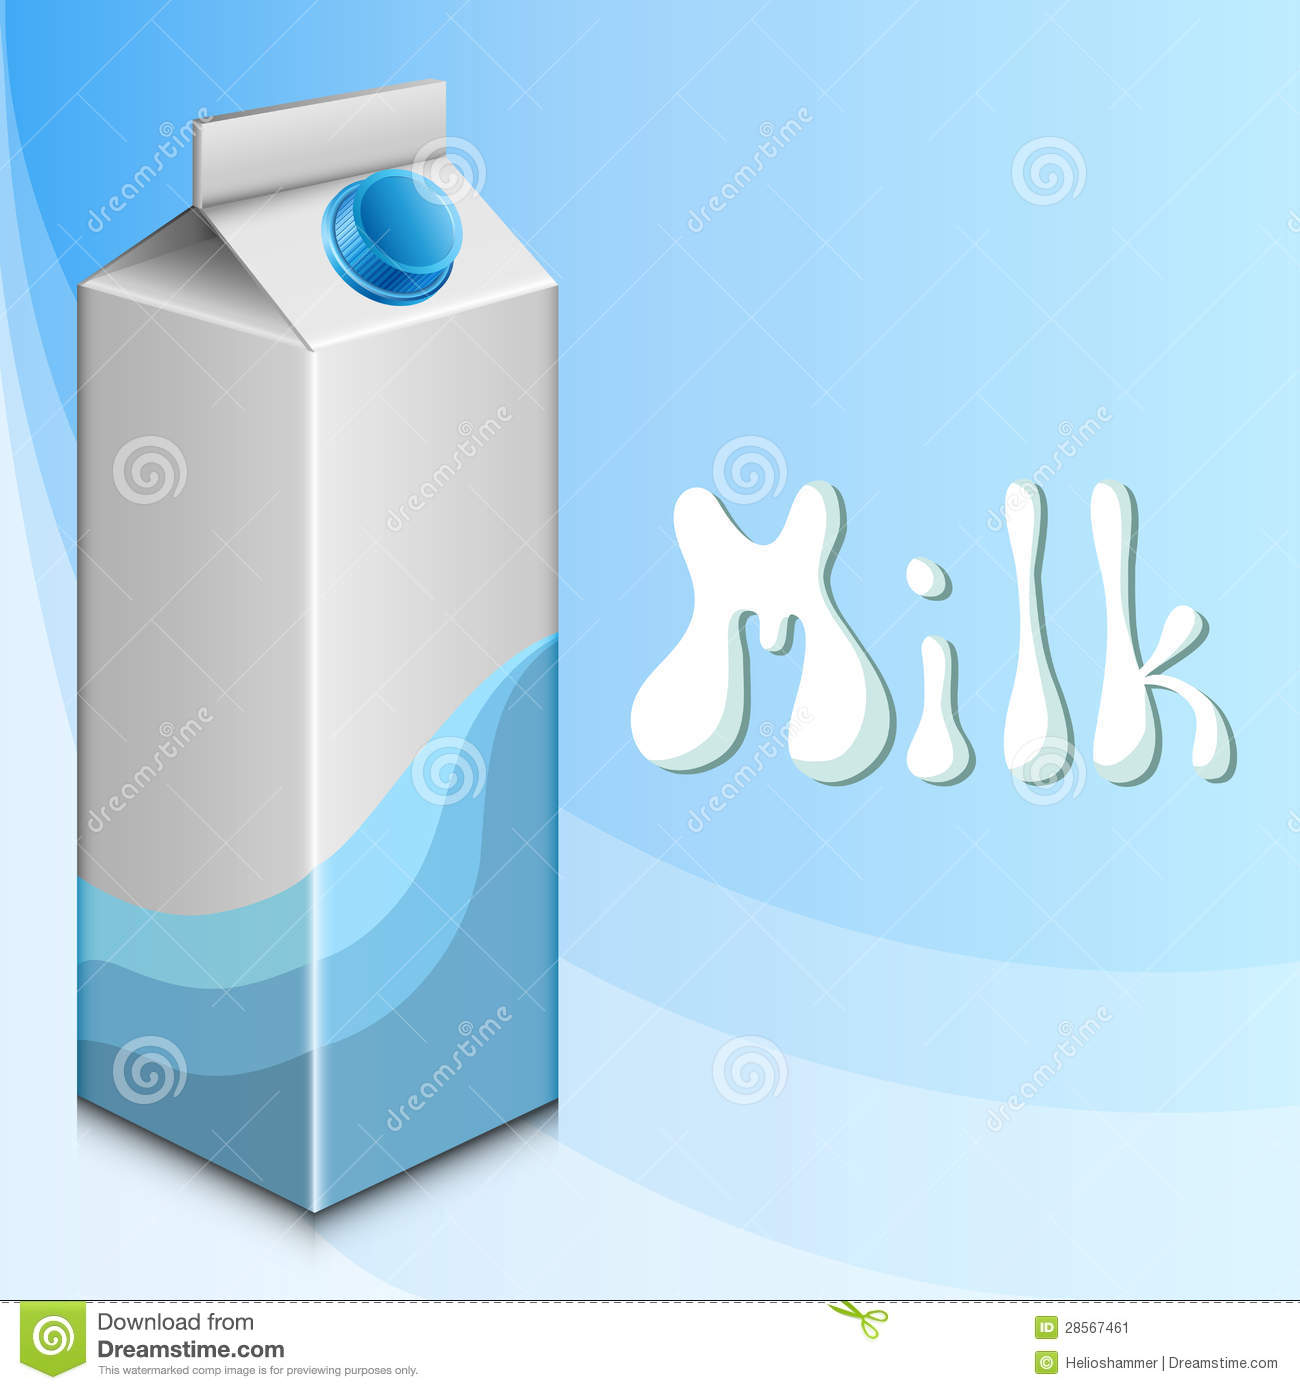 Blue Background With Milk Carton Stock Image   Image  28567461